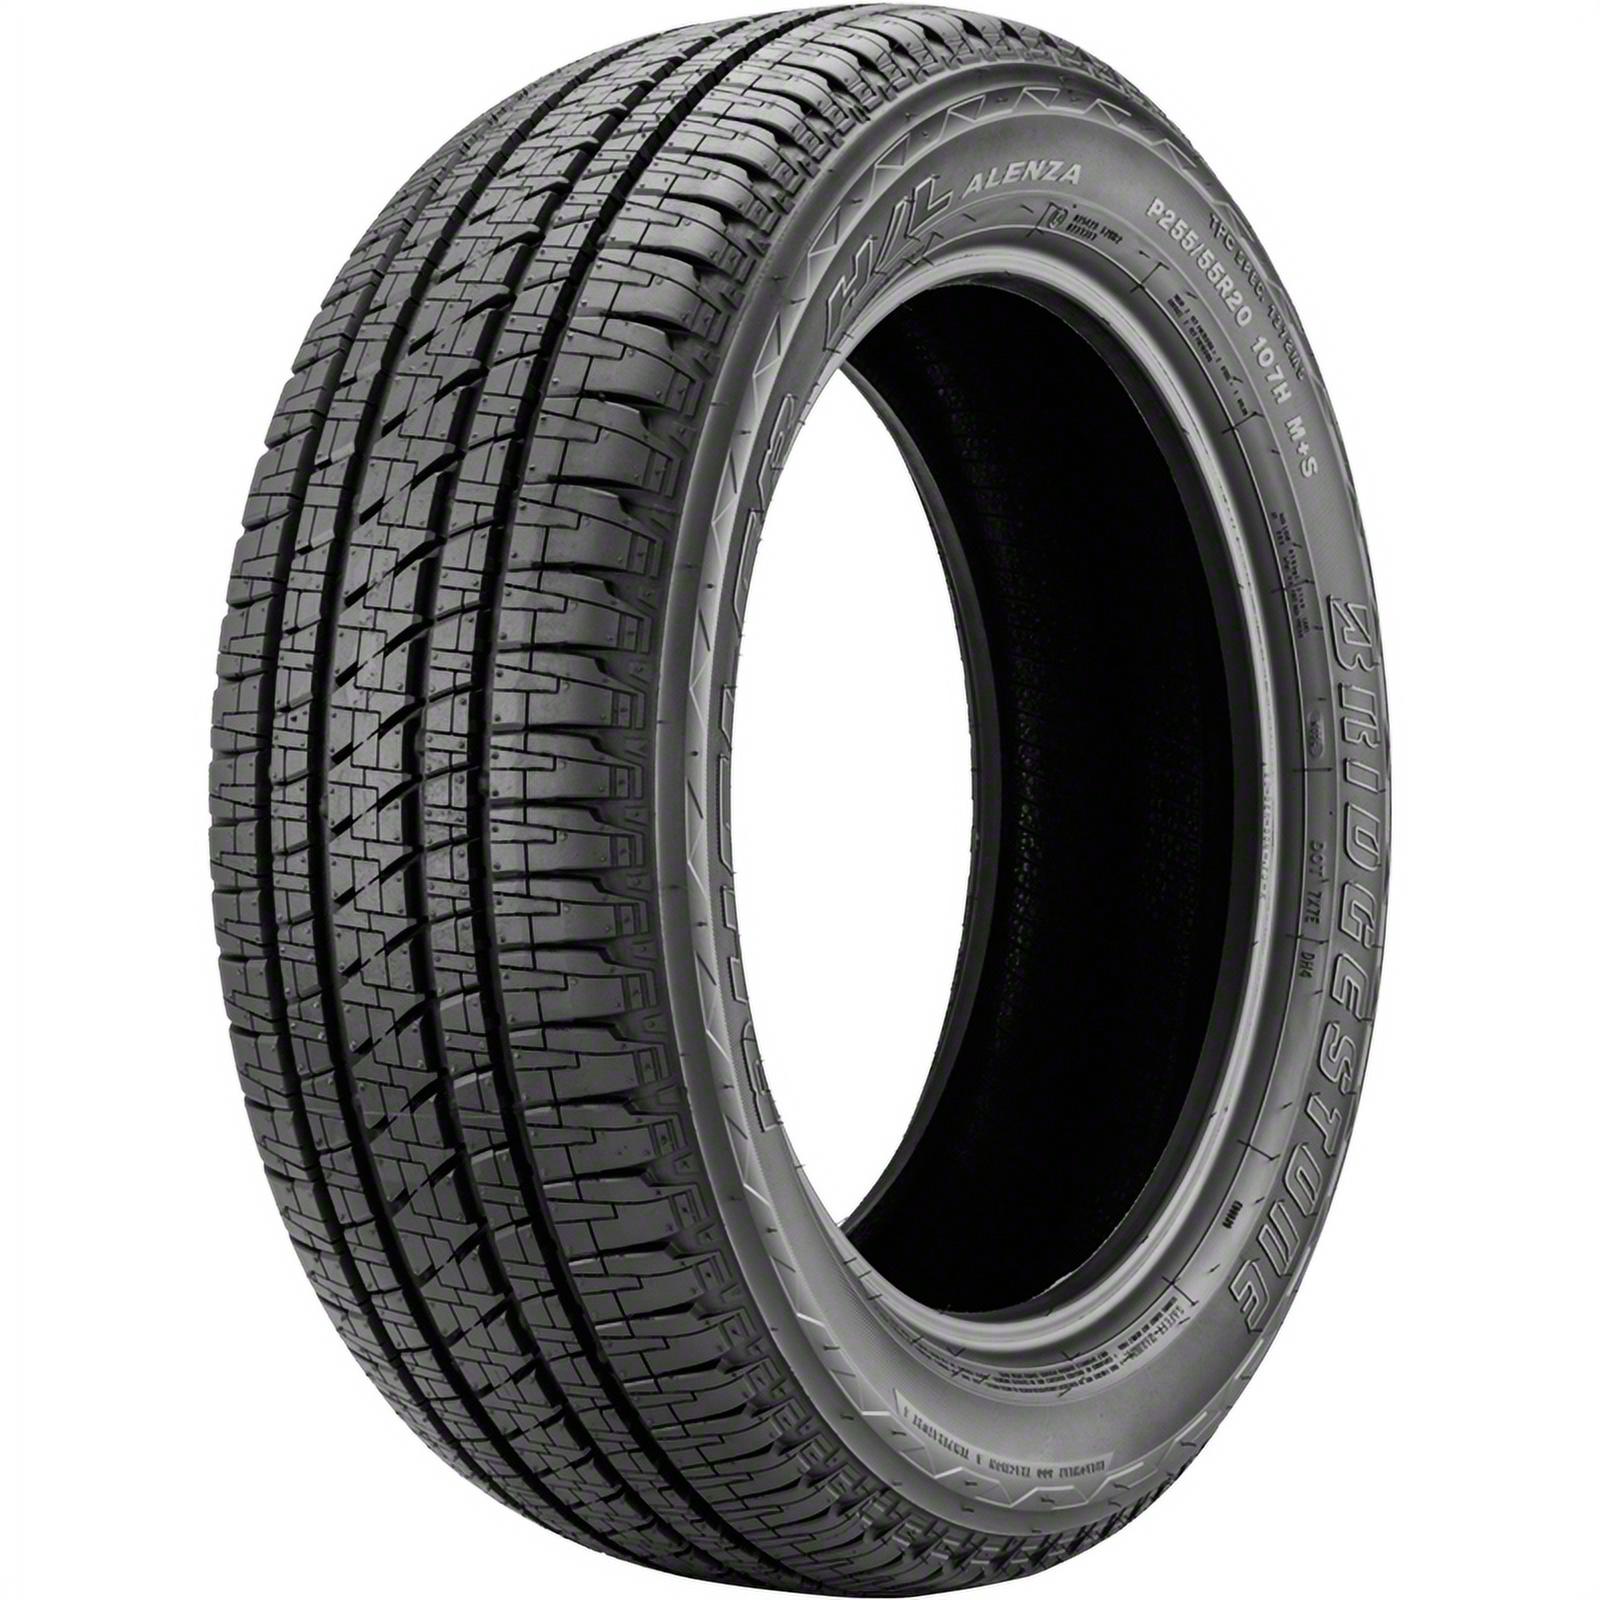 Bridgestone Dueler H/L Alenza 275/55R20 111 S Tire - image 1 of 5